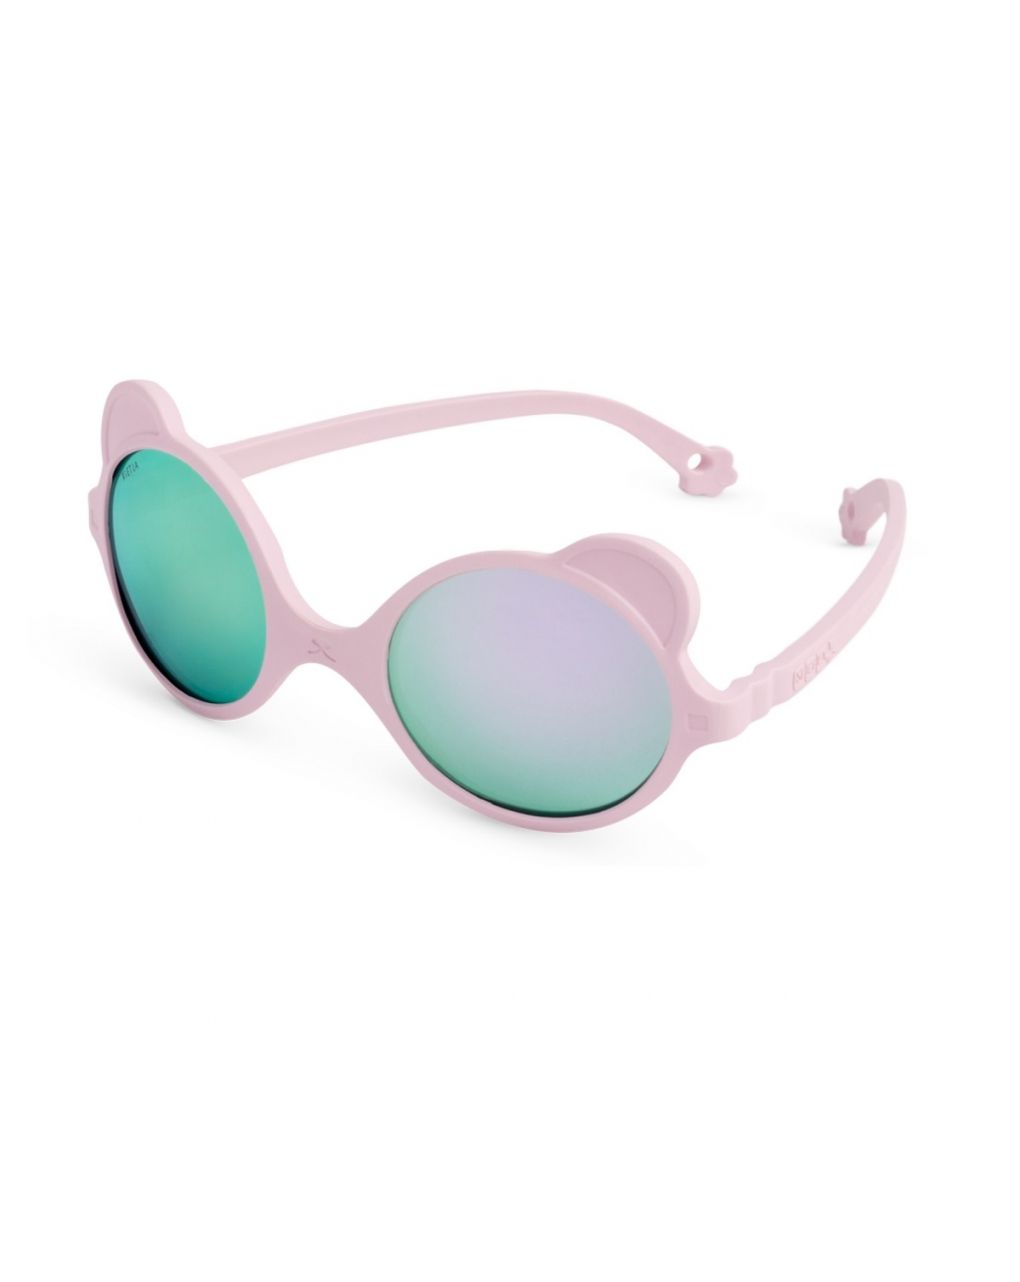 Kietla γυαλιά ηλίου ours'on 1-2 ετών light pink - kietla